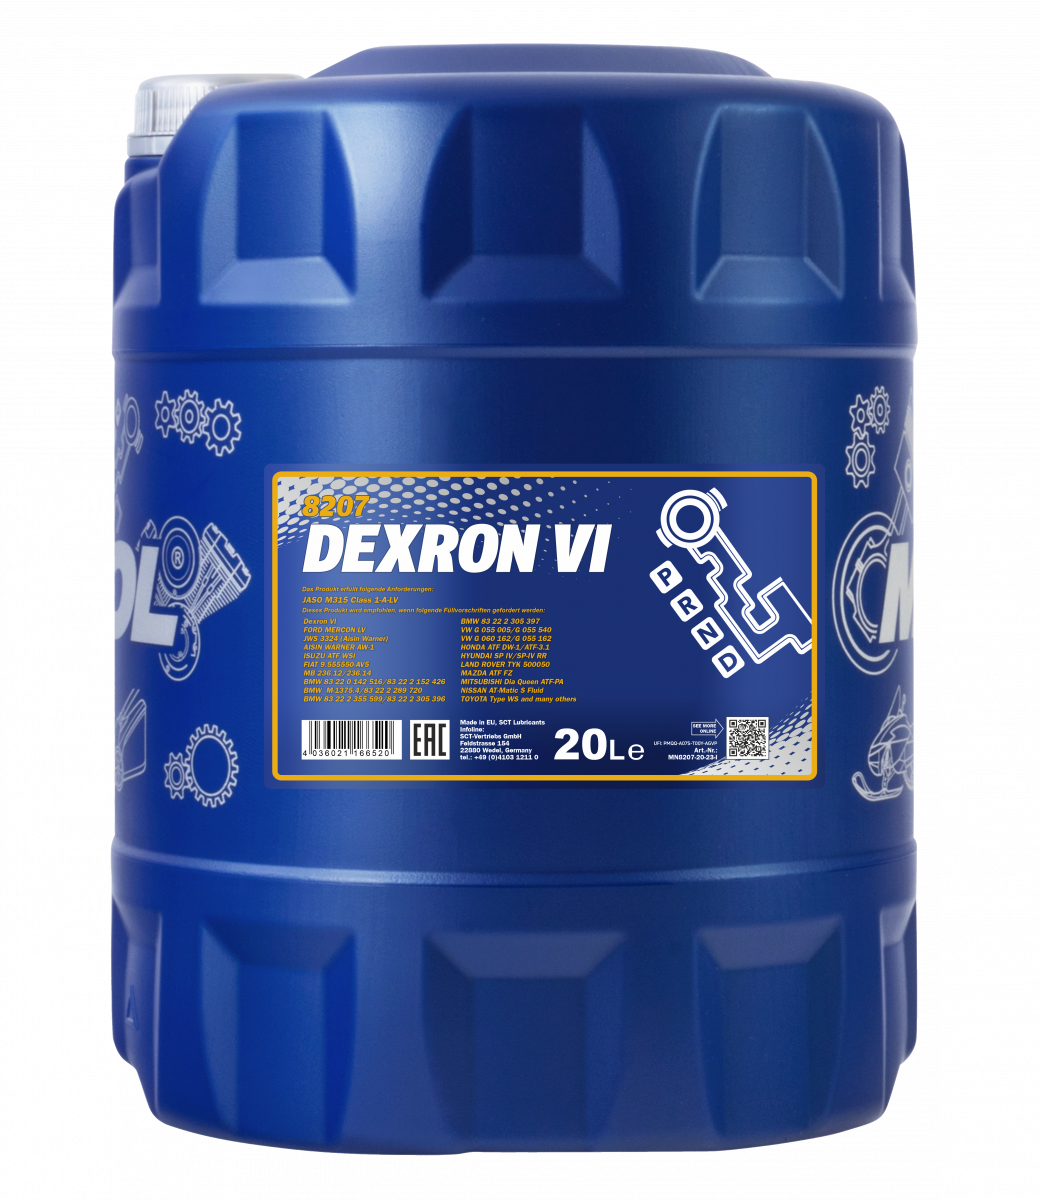 Dexron VI / Mercon LV Automatic Transmission Fluid | Outlaw Performance